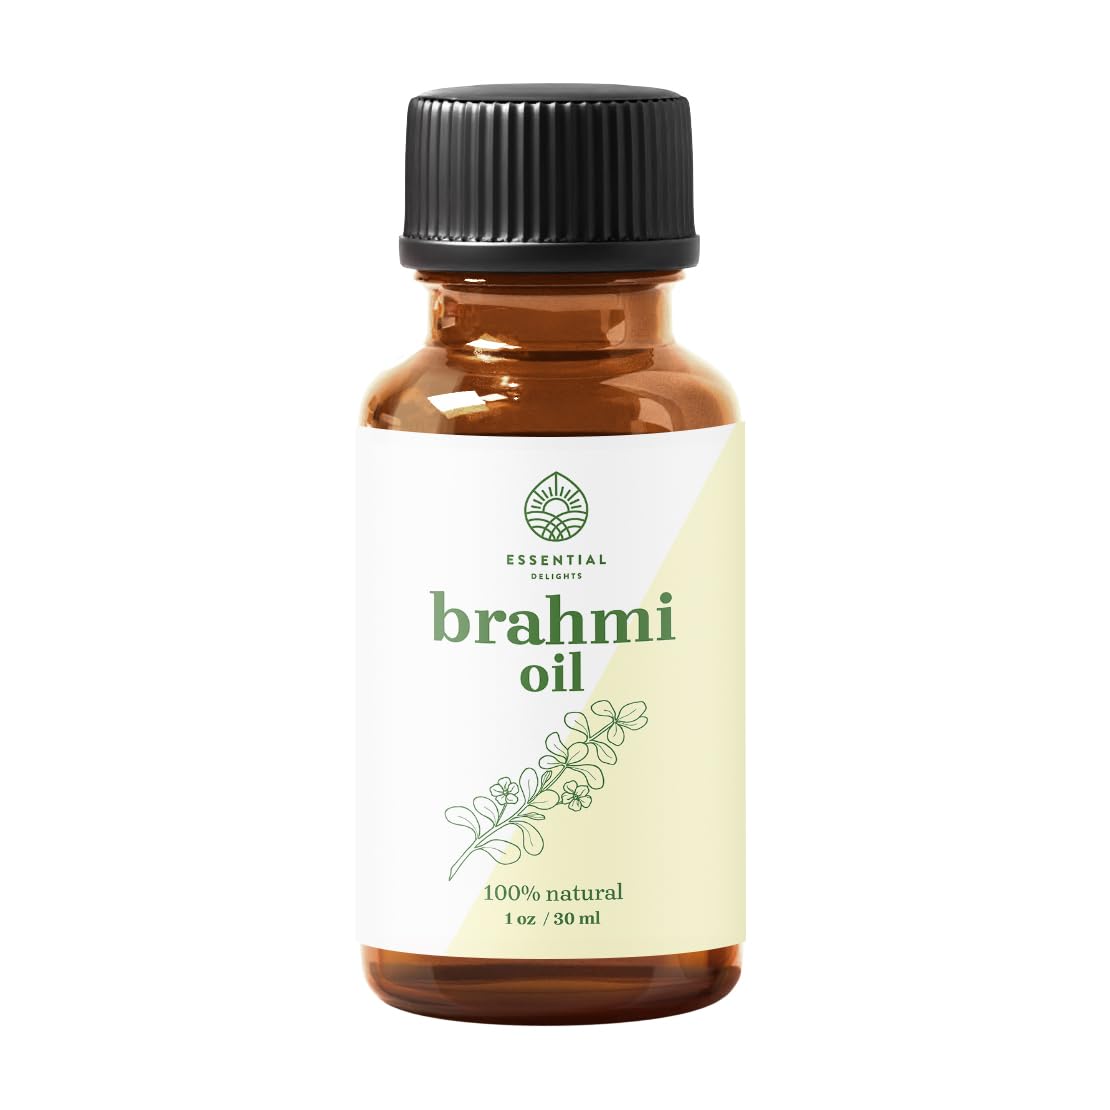 Essential Delights Brahmi Oil - Premium Undiluted Carrier Oil (1 oz) | for Skin, Face, Body, Hair Revitalization